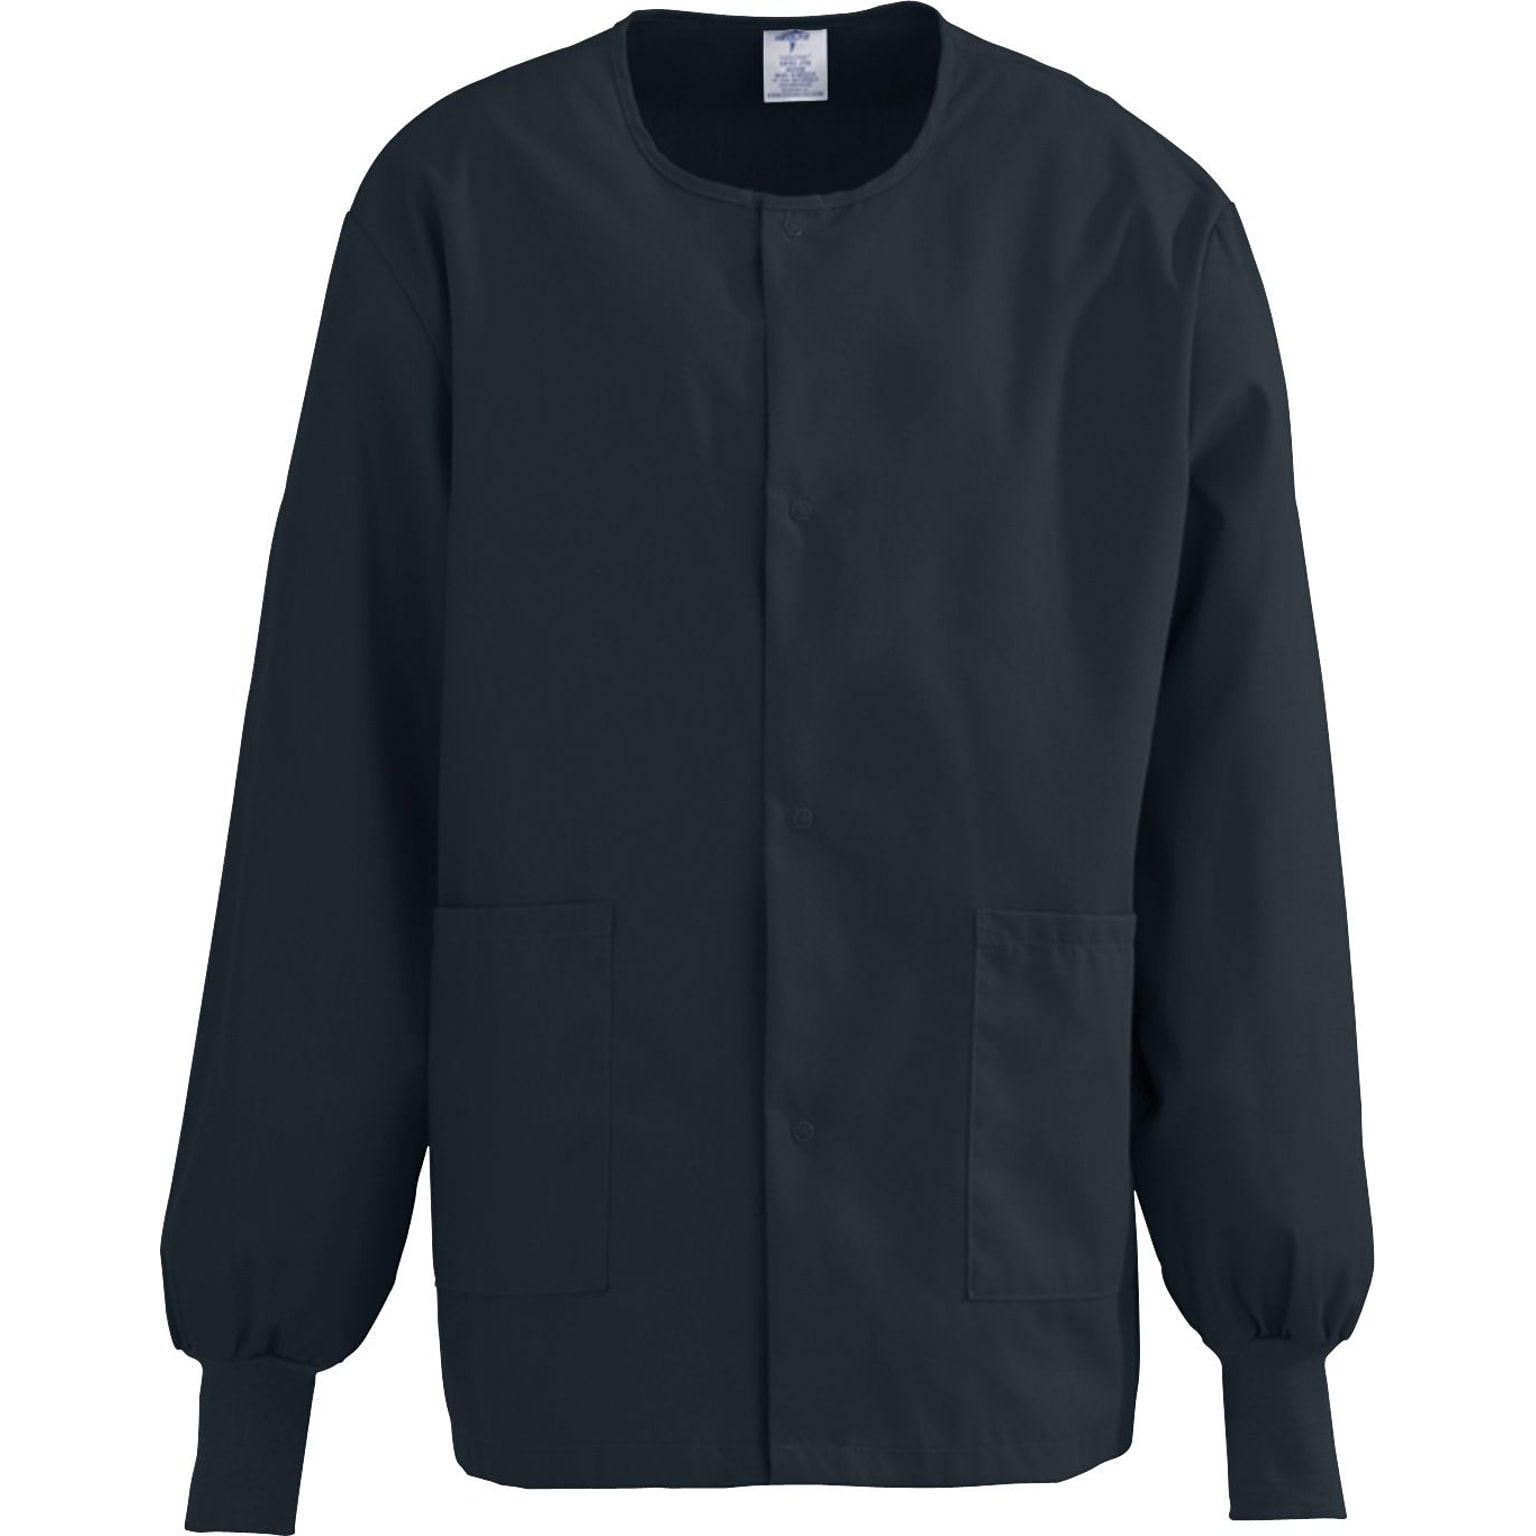 Medline ComfortEase Unisex Two-pockets Warm-up Scrub Jackets, Black, Large